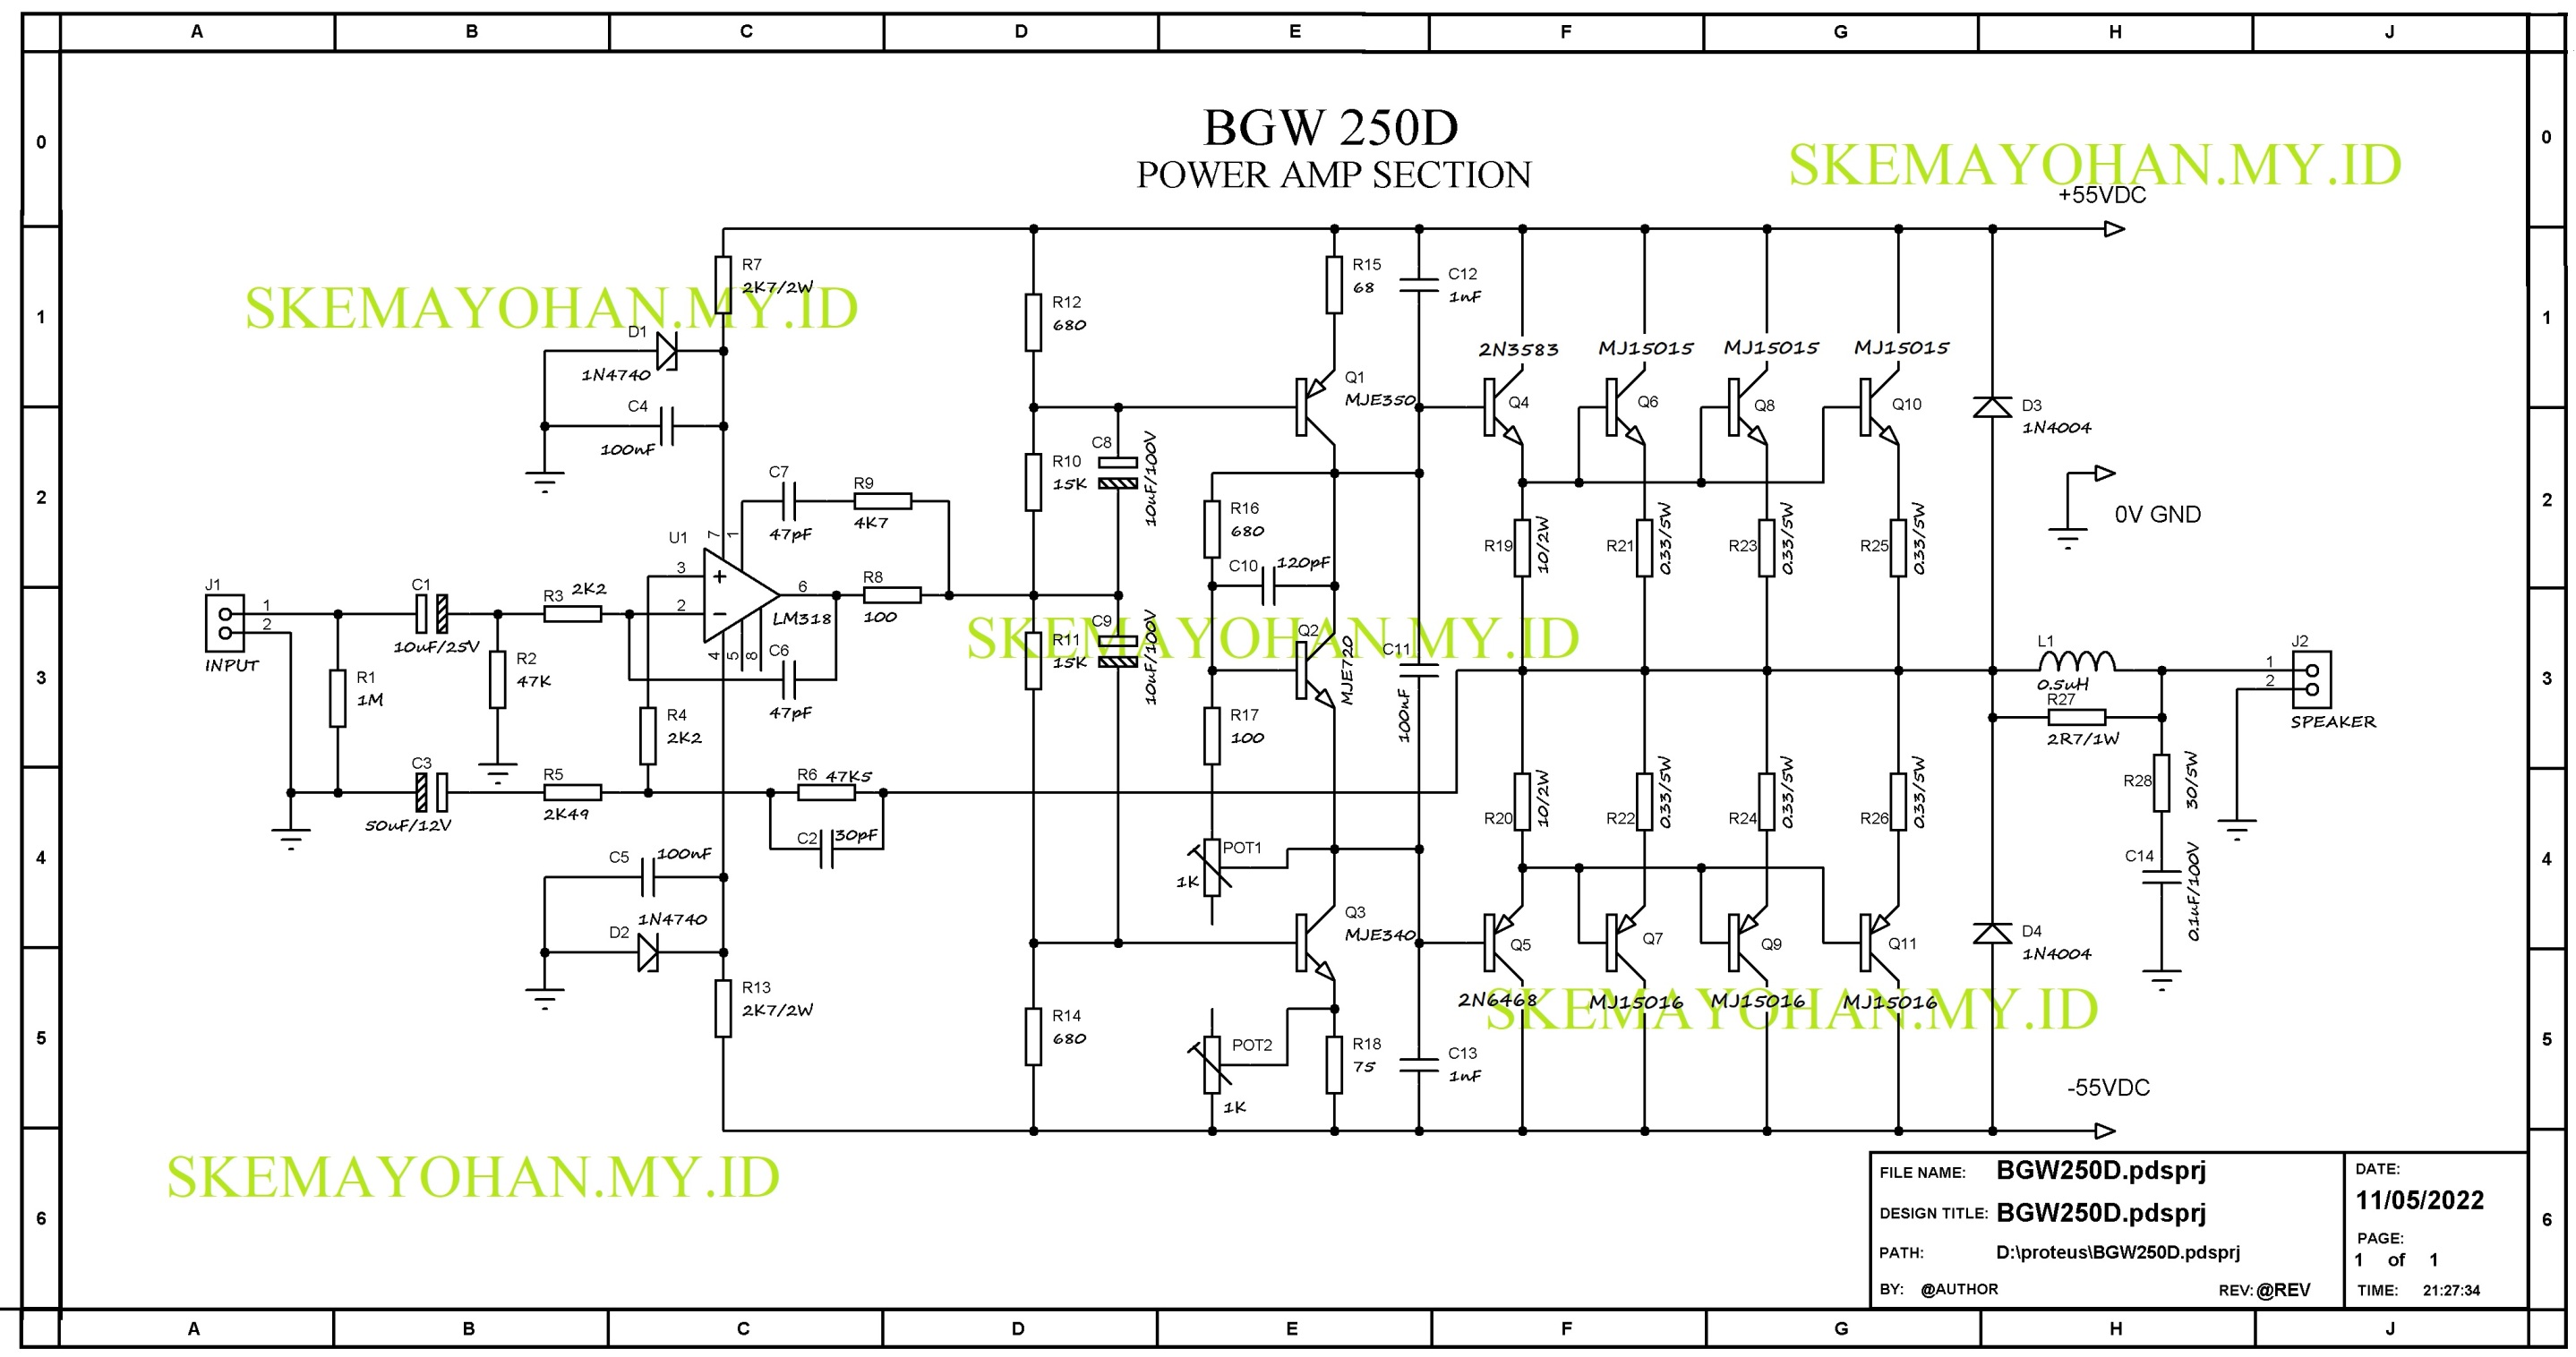 skema hasil gambar ulang OCL 250W 55V BGW 250D